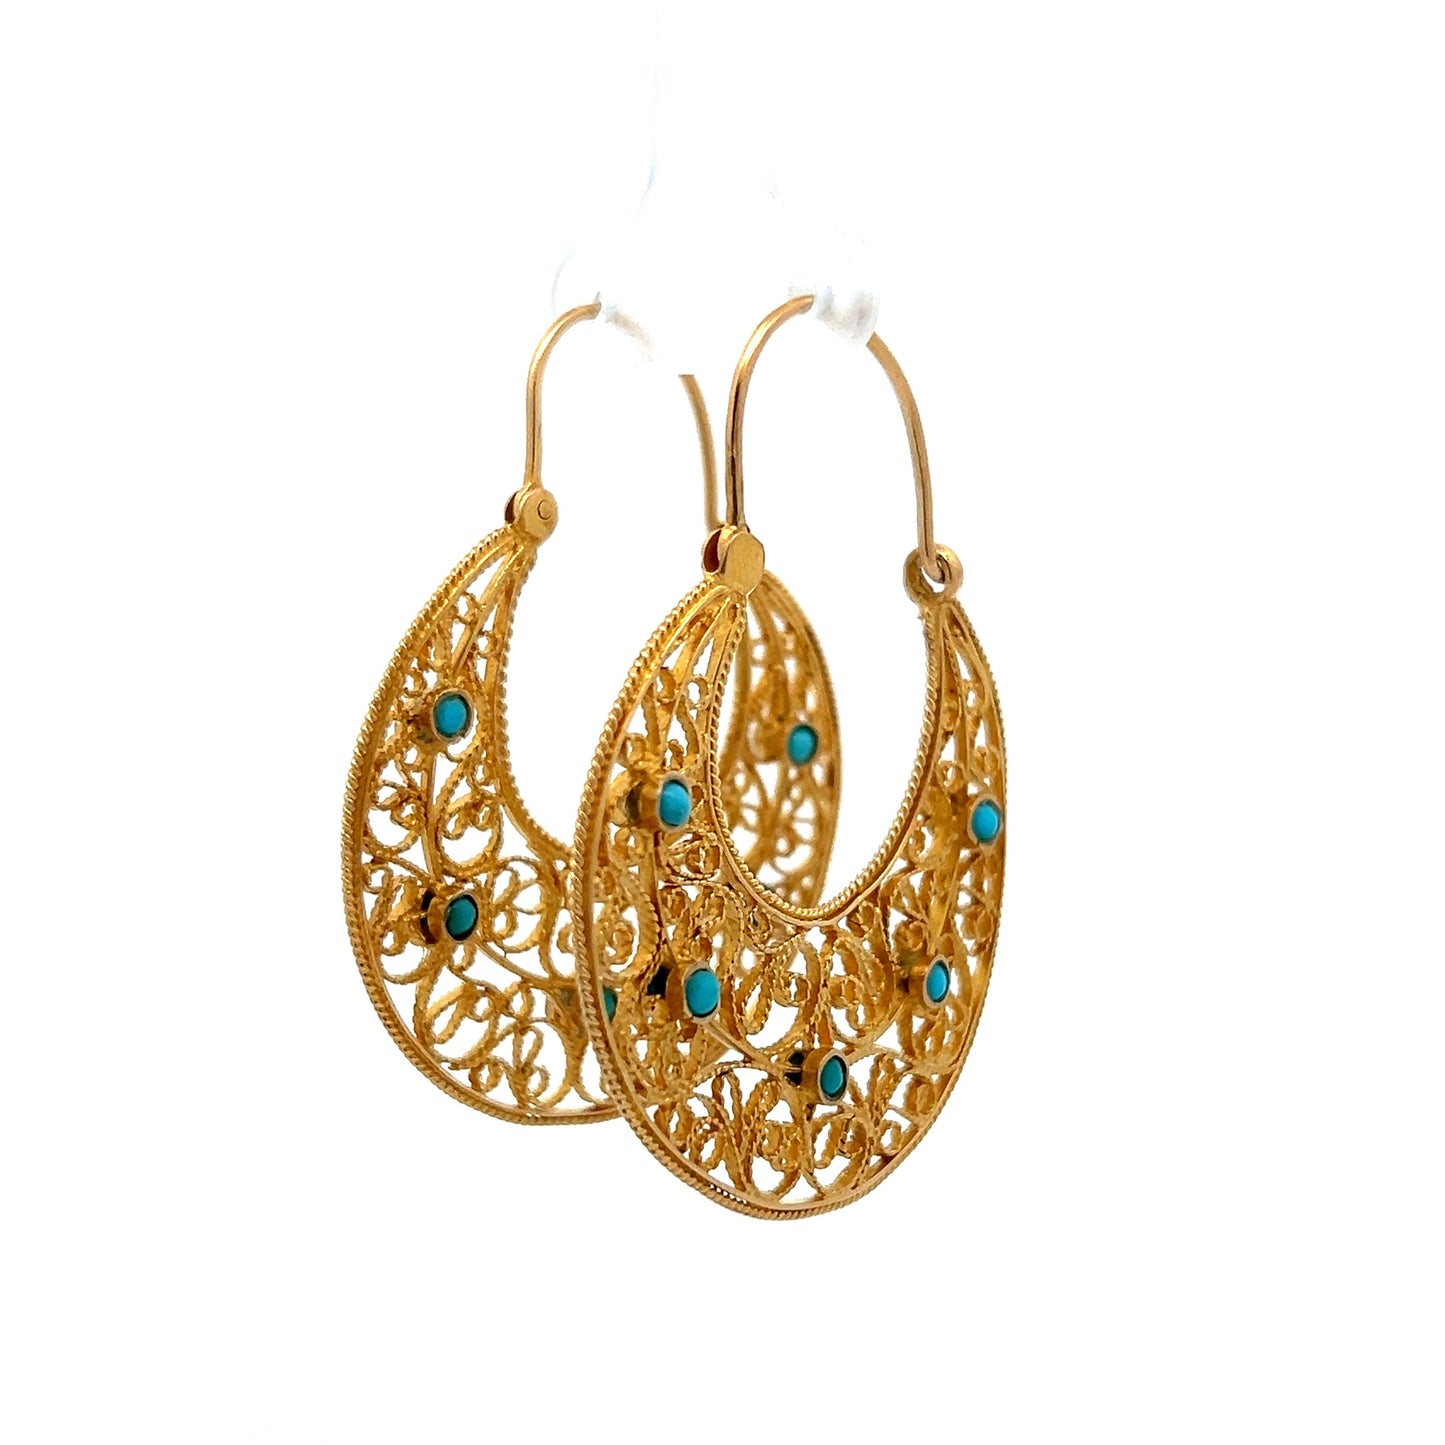 Vintage 1960's Turquoise Hoop Earrings in Yellow Gold